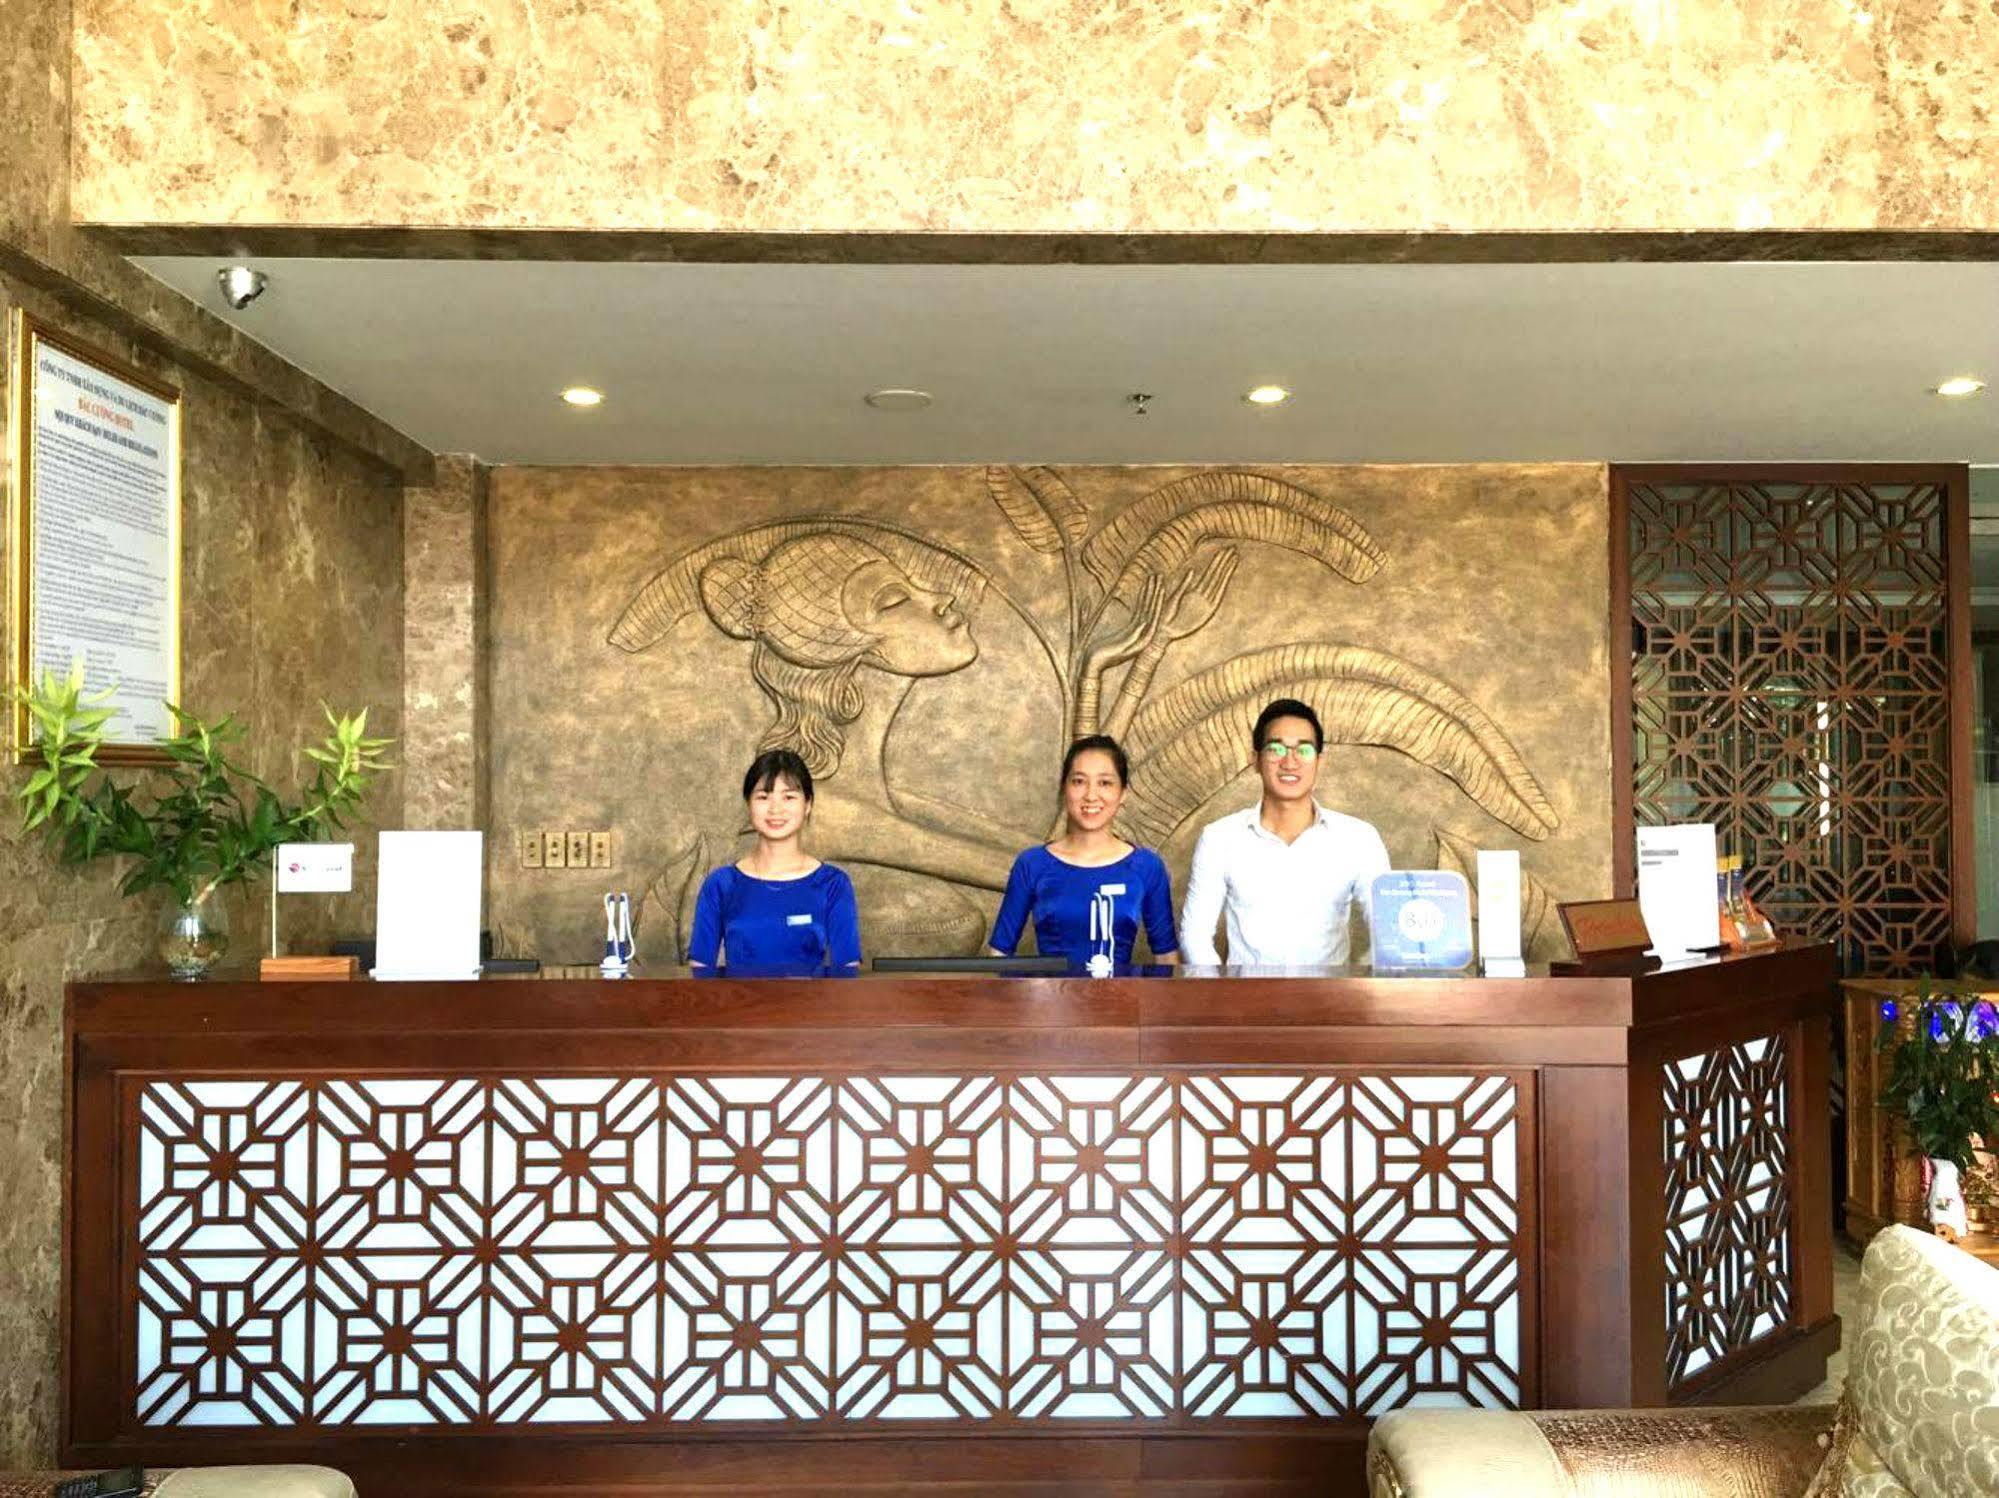 Bac Cuong Hotel Da Nang Exterior photo